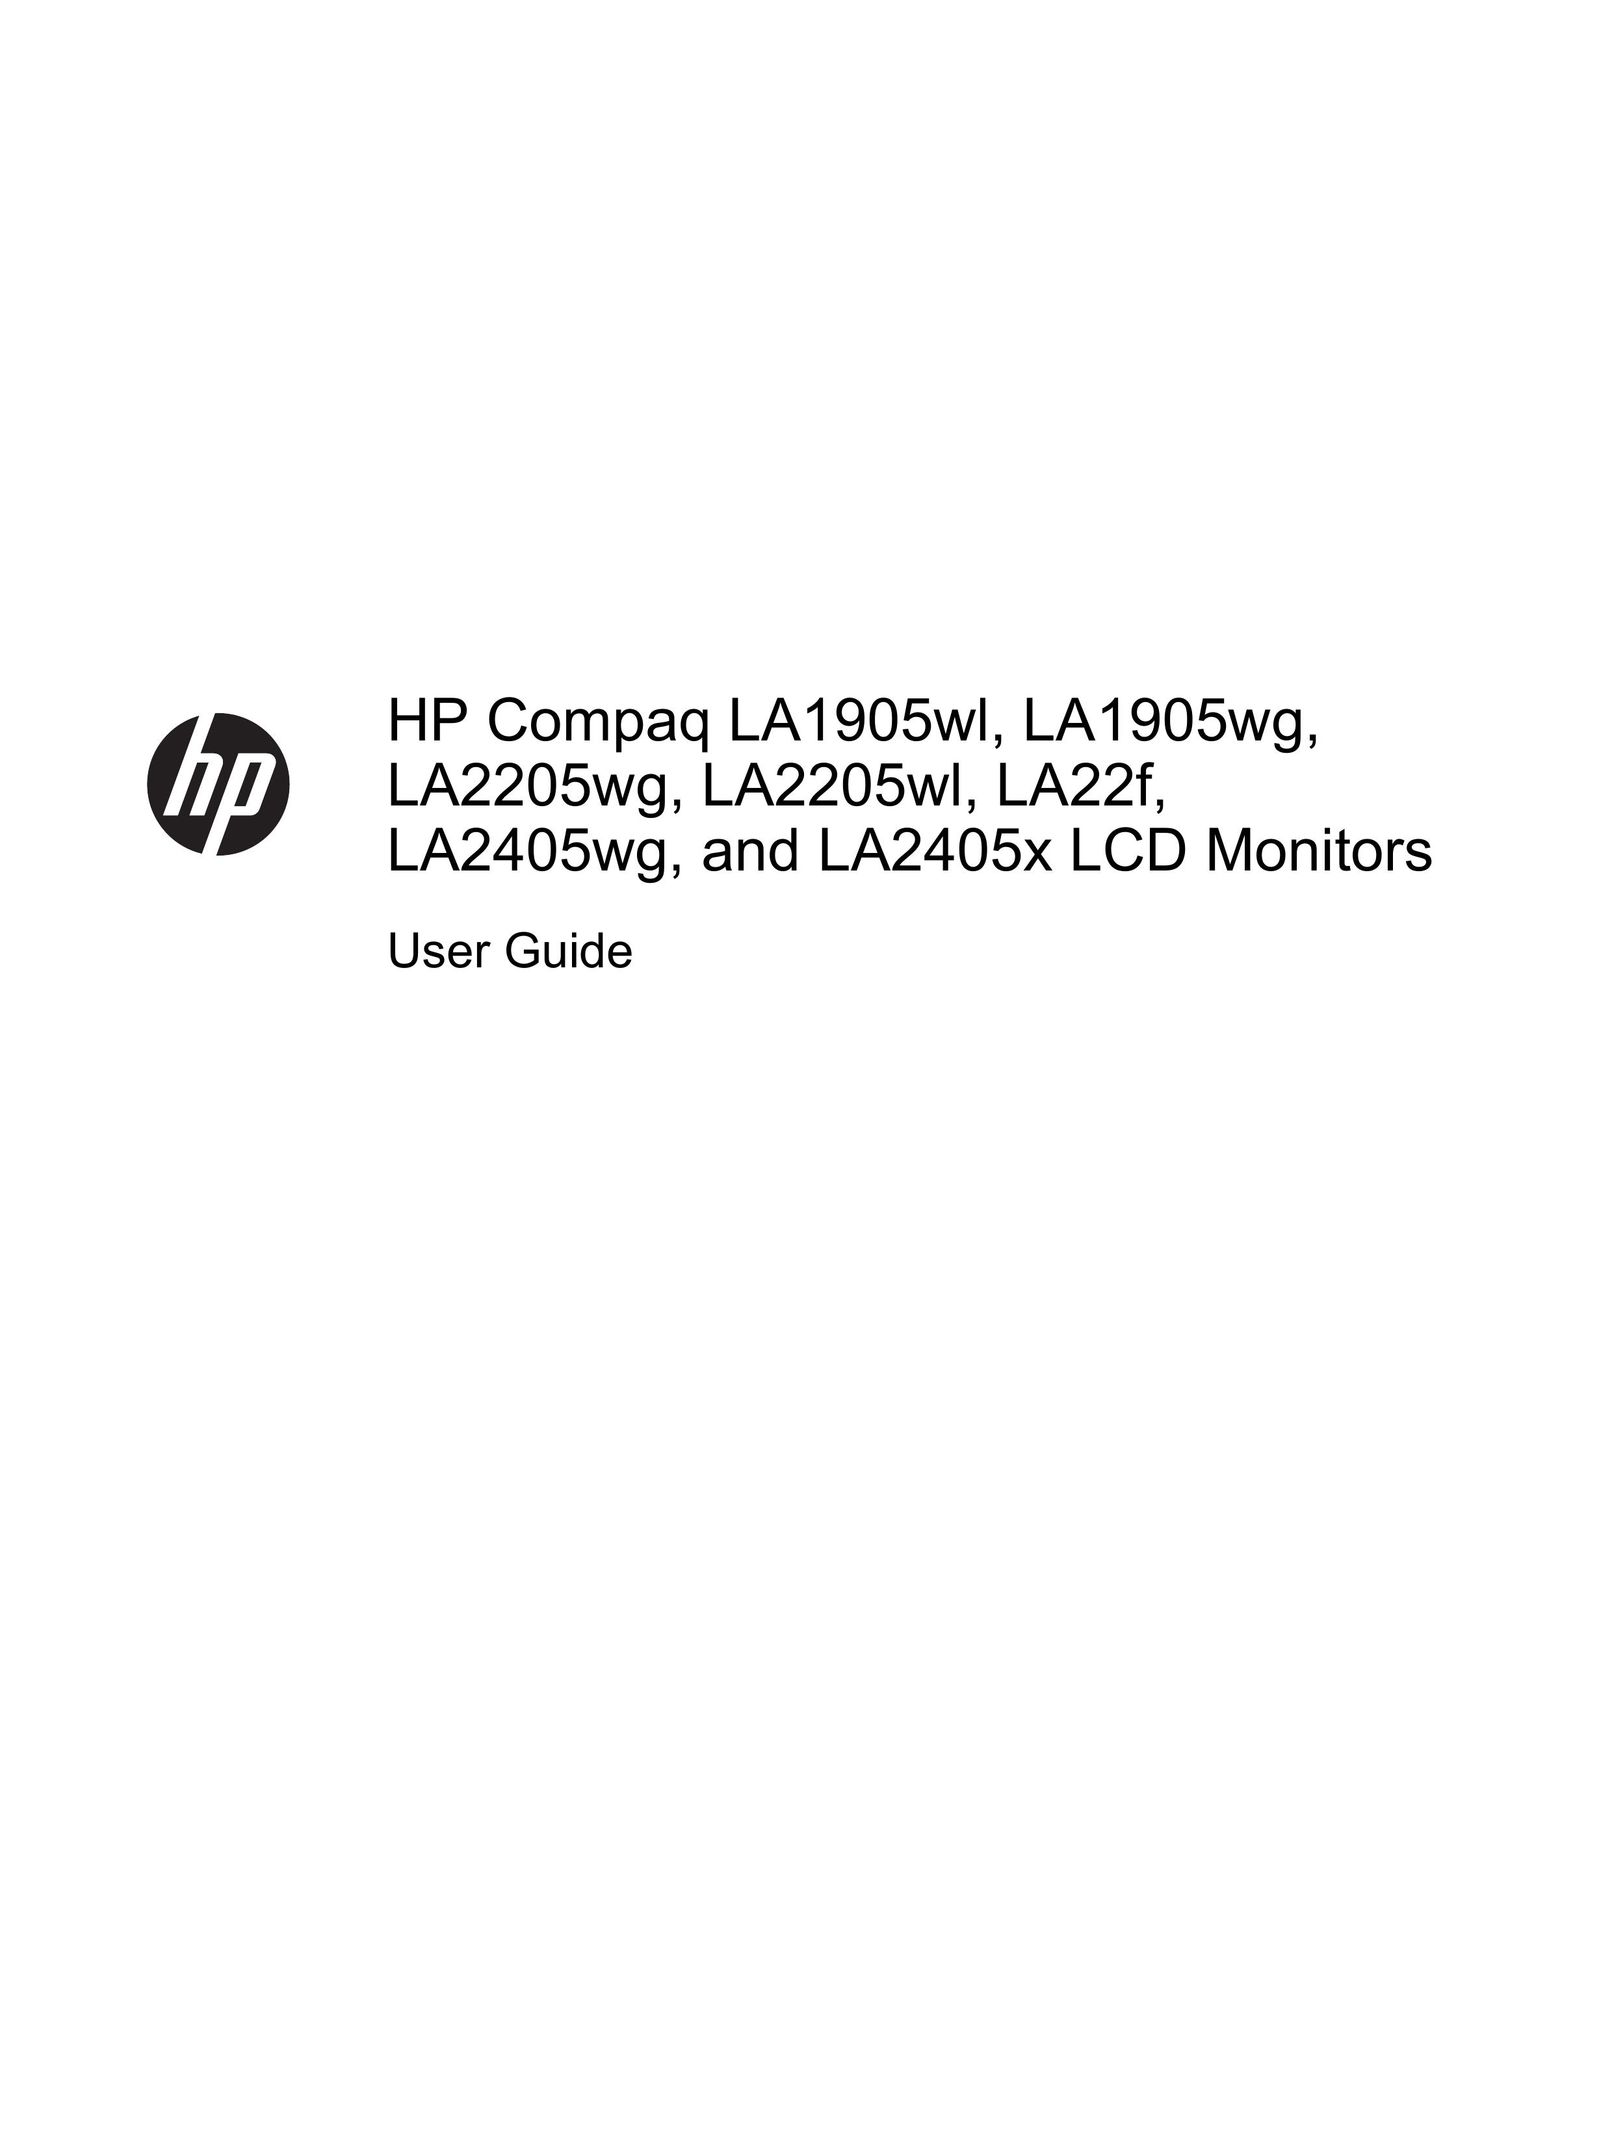 HP (Hewlett-Packard) LA2405WG Car Video System User Manual